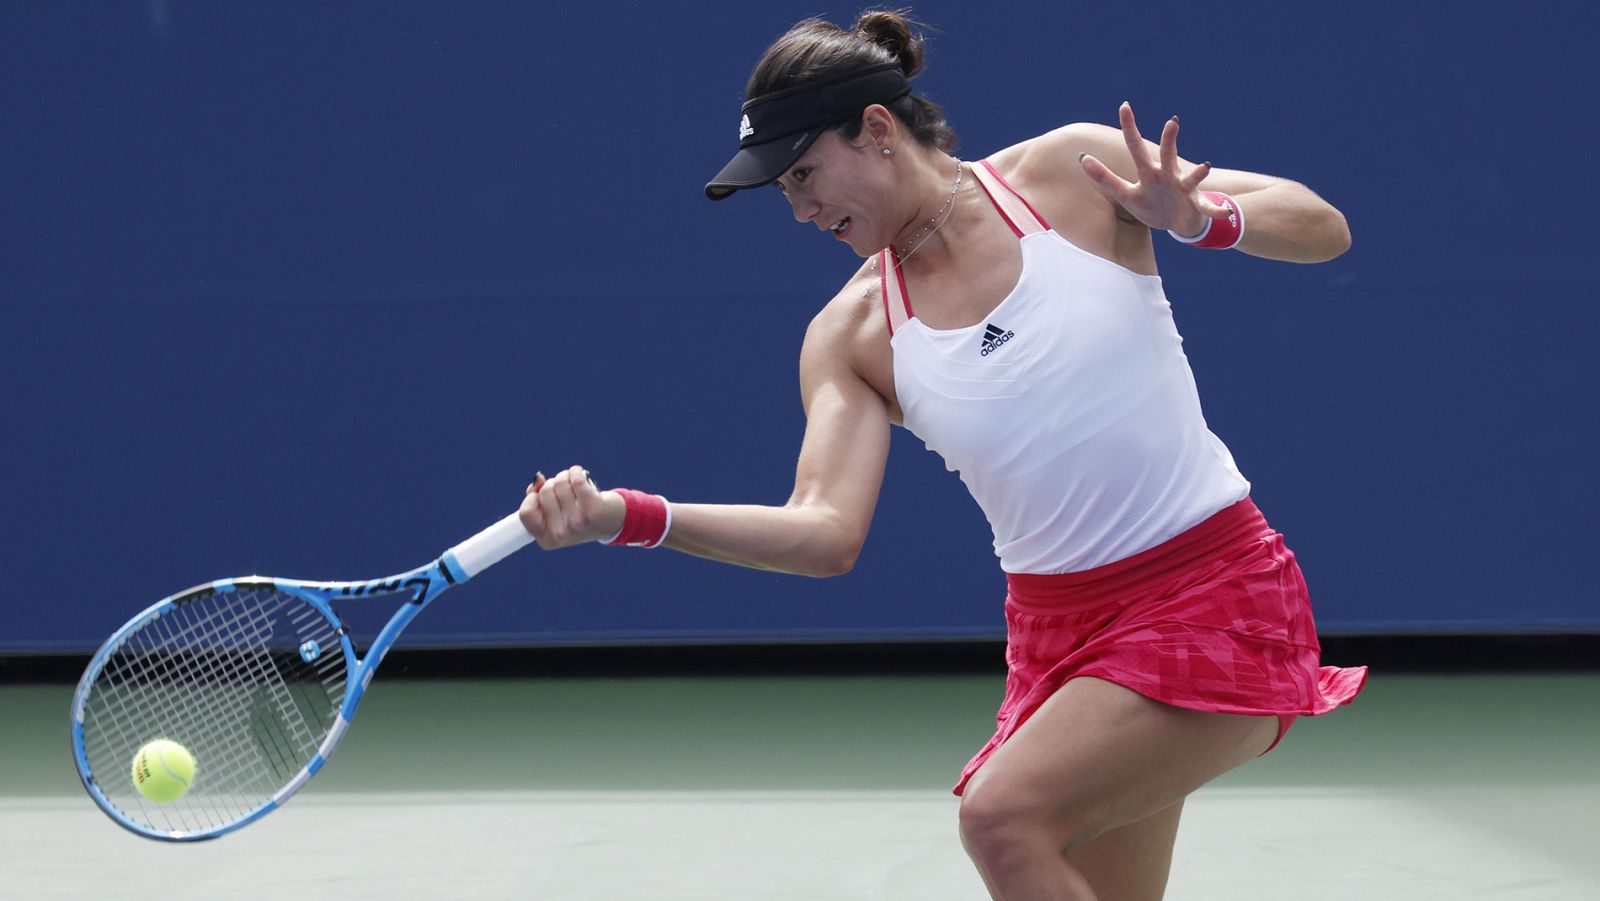 La tenista española Garbiñe Muguruza, en su partido contra Tsvetlana Pironkova.